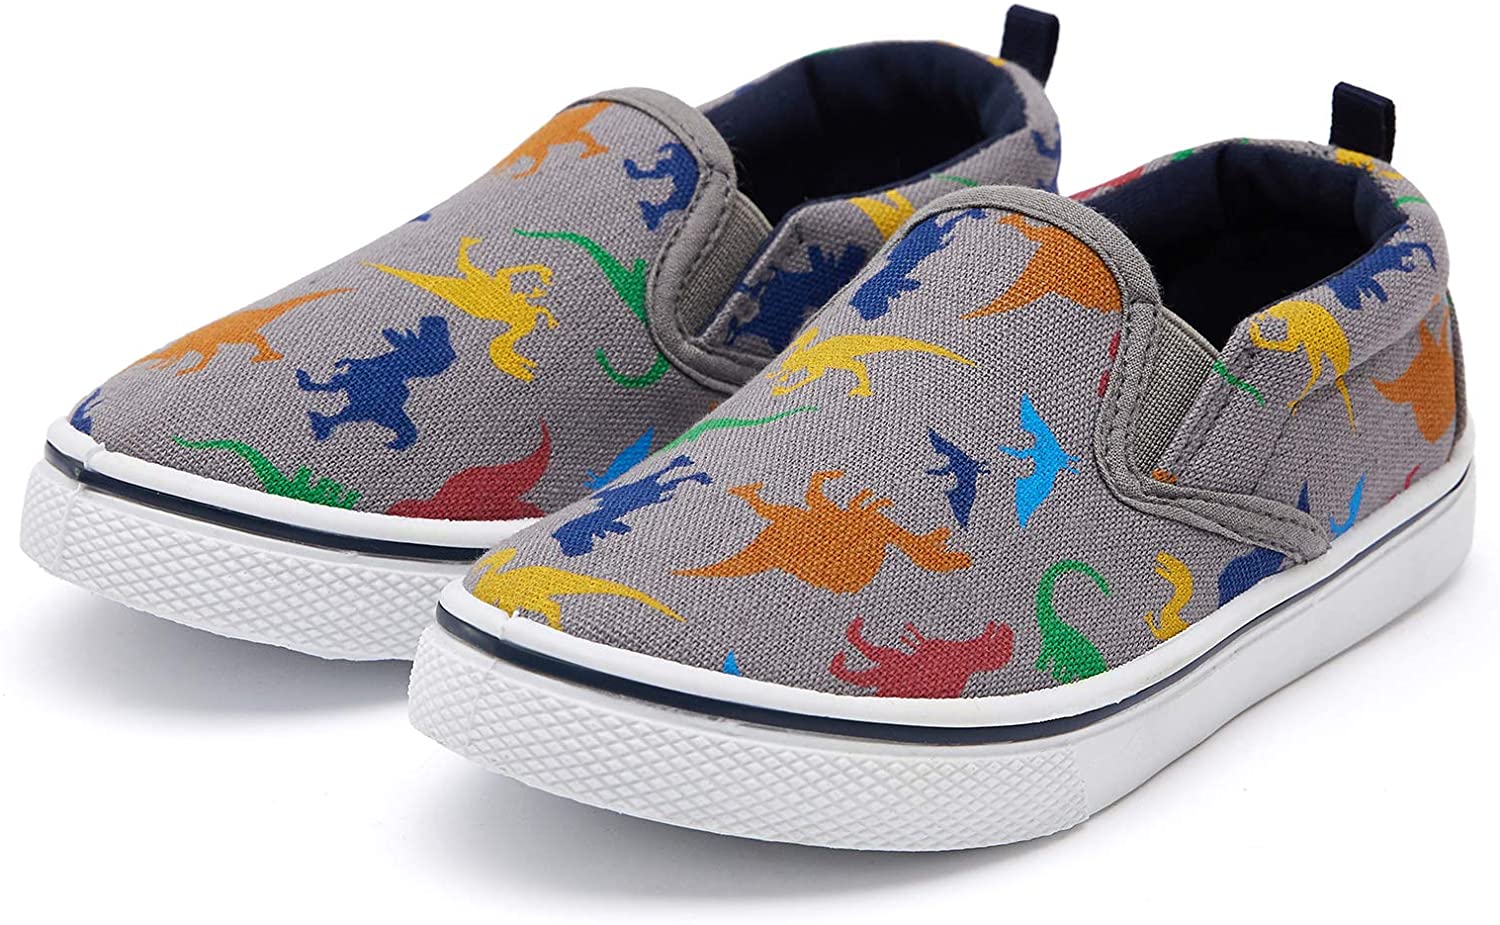 K KomForme Toddler Girls &amp; Boys Slip On Canvas Sneakers Loafers Moccasins Kids Tennis Shoes